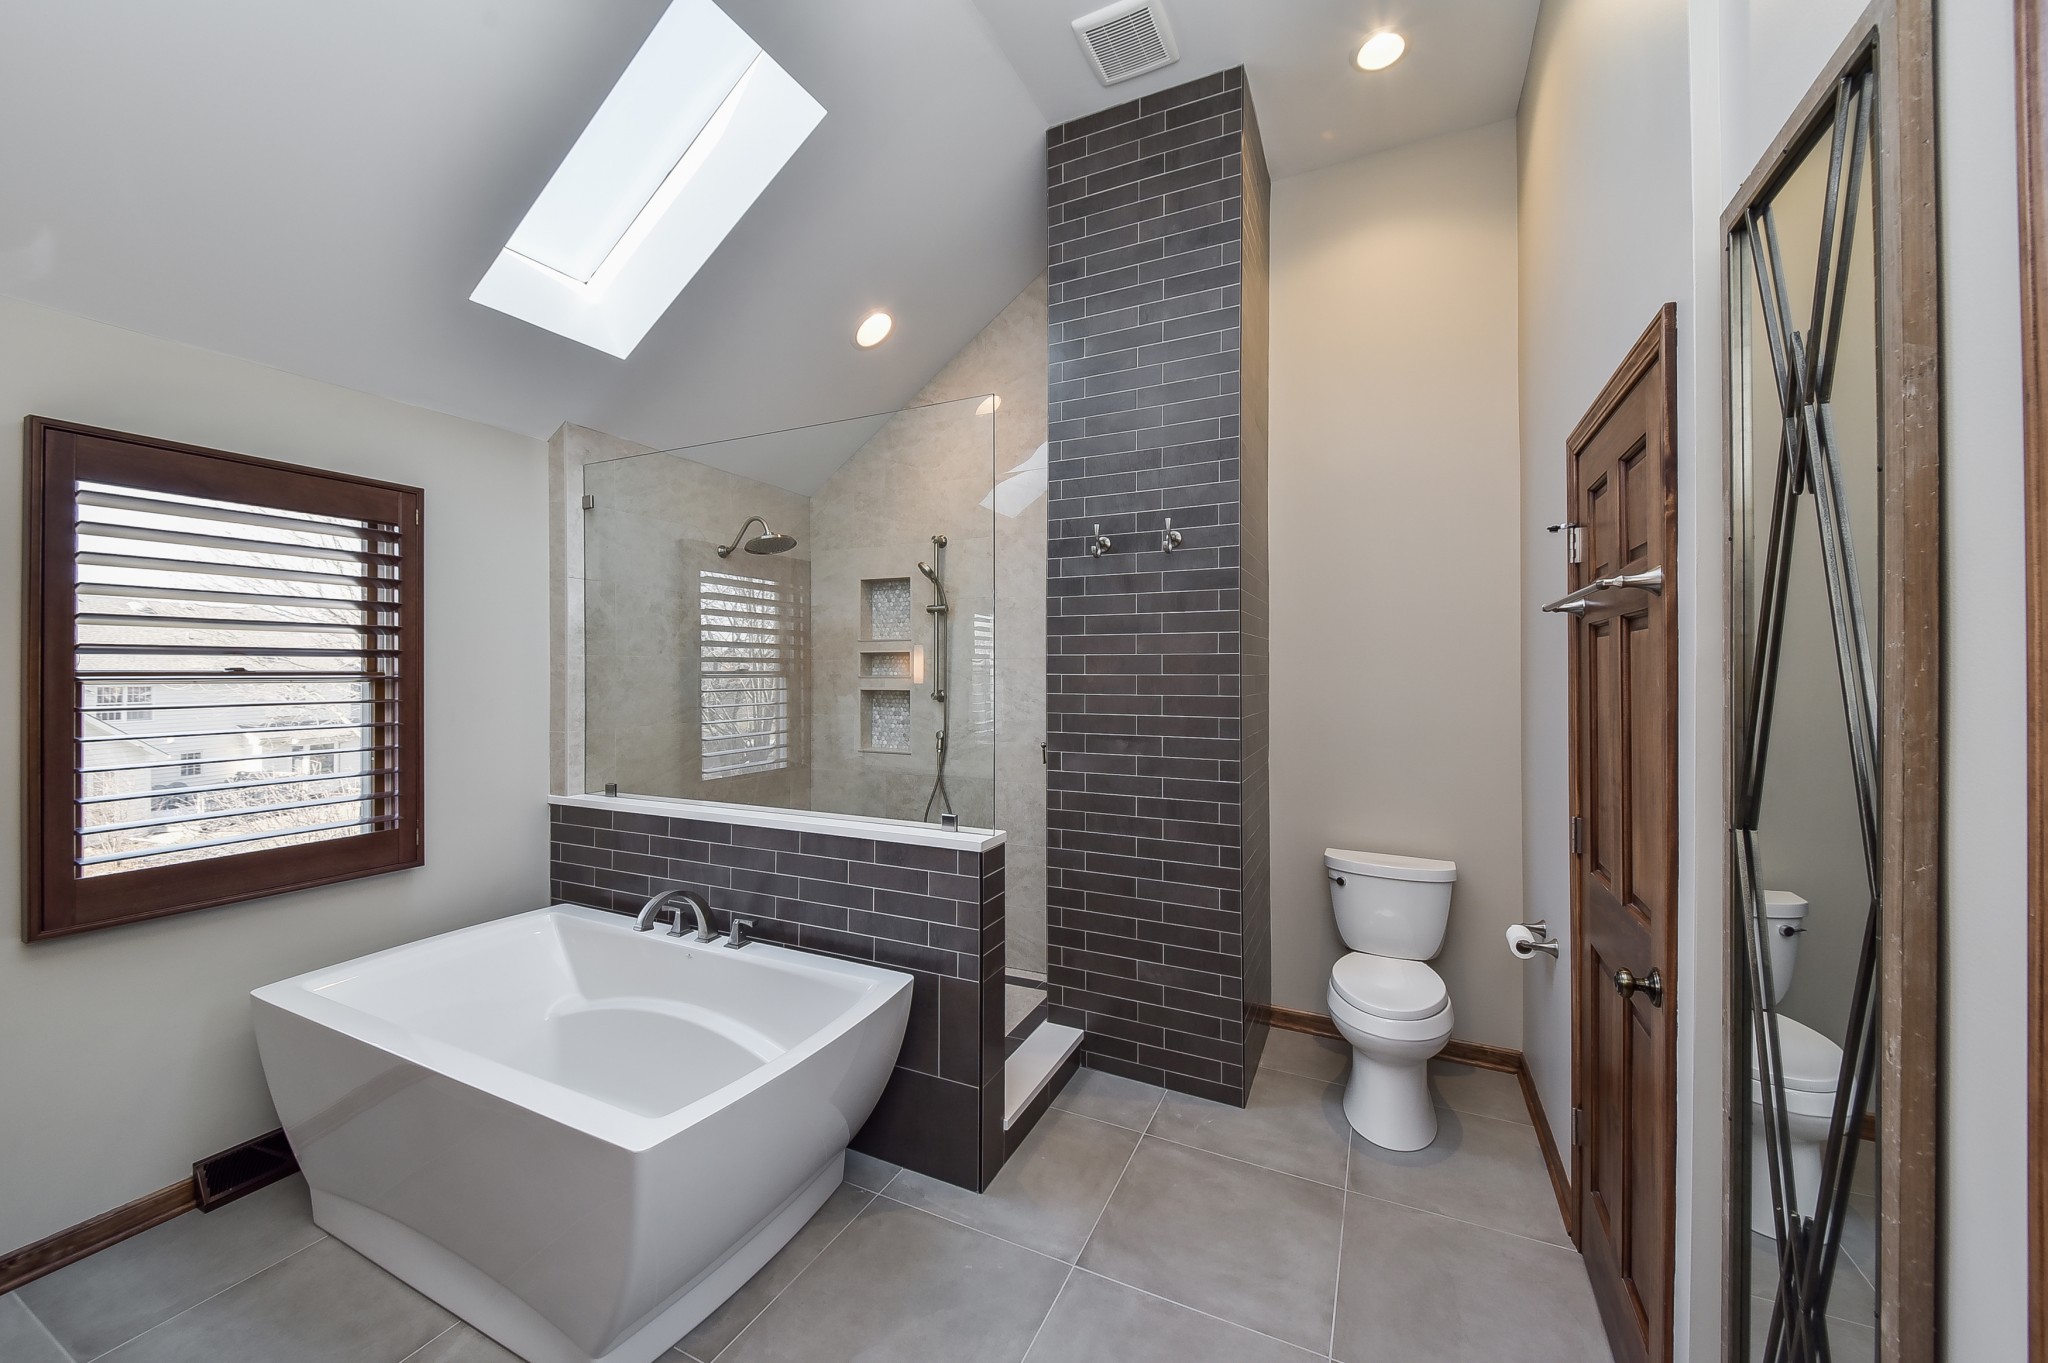 14 Bathroom Design Trends For 2021, Best Bathroom Renovation Ideas